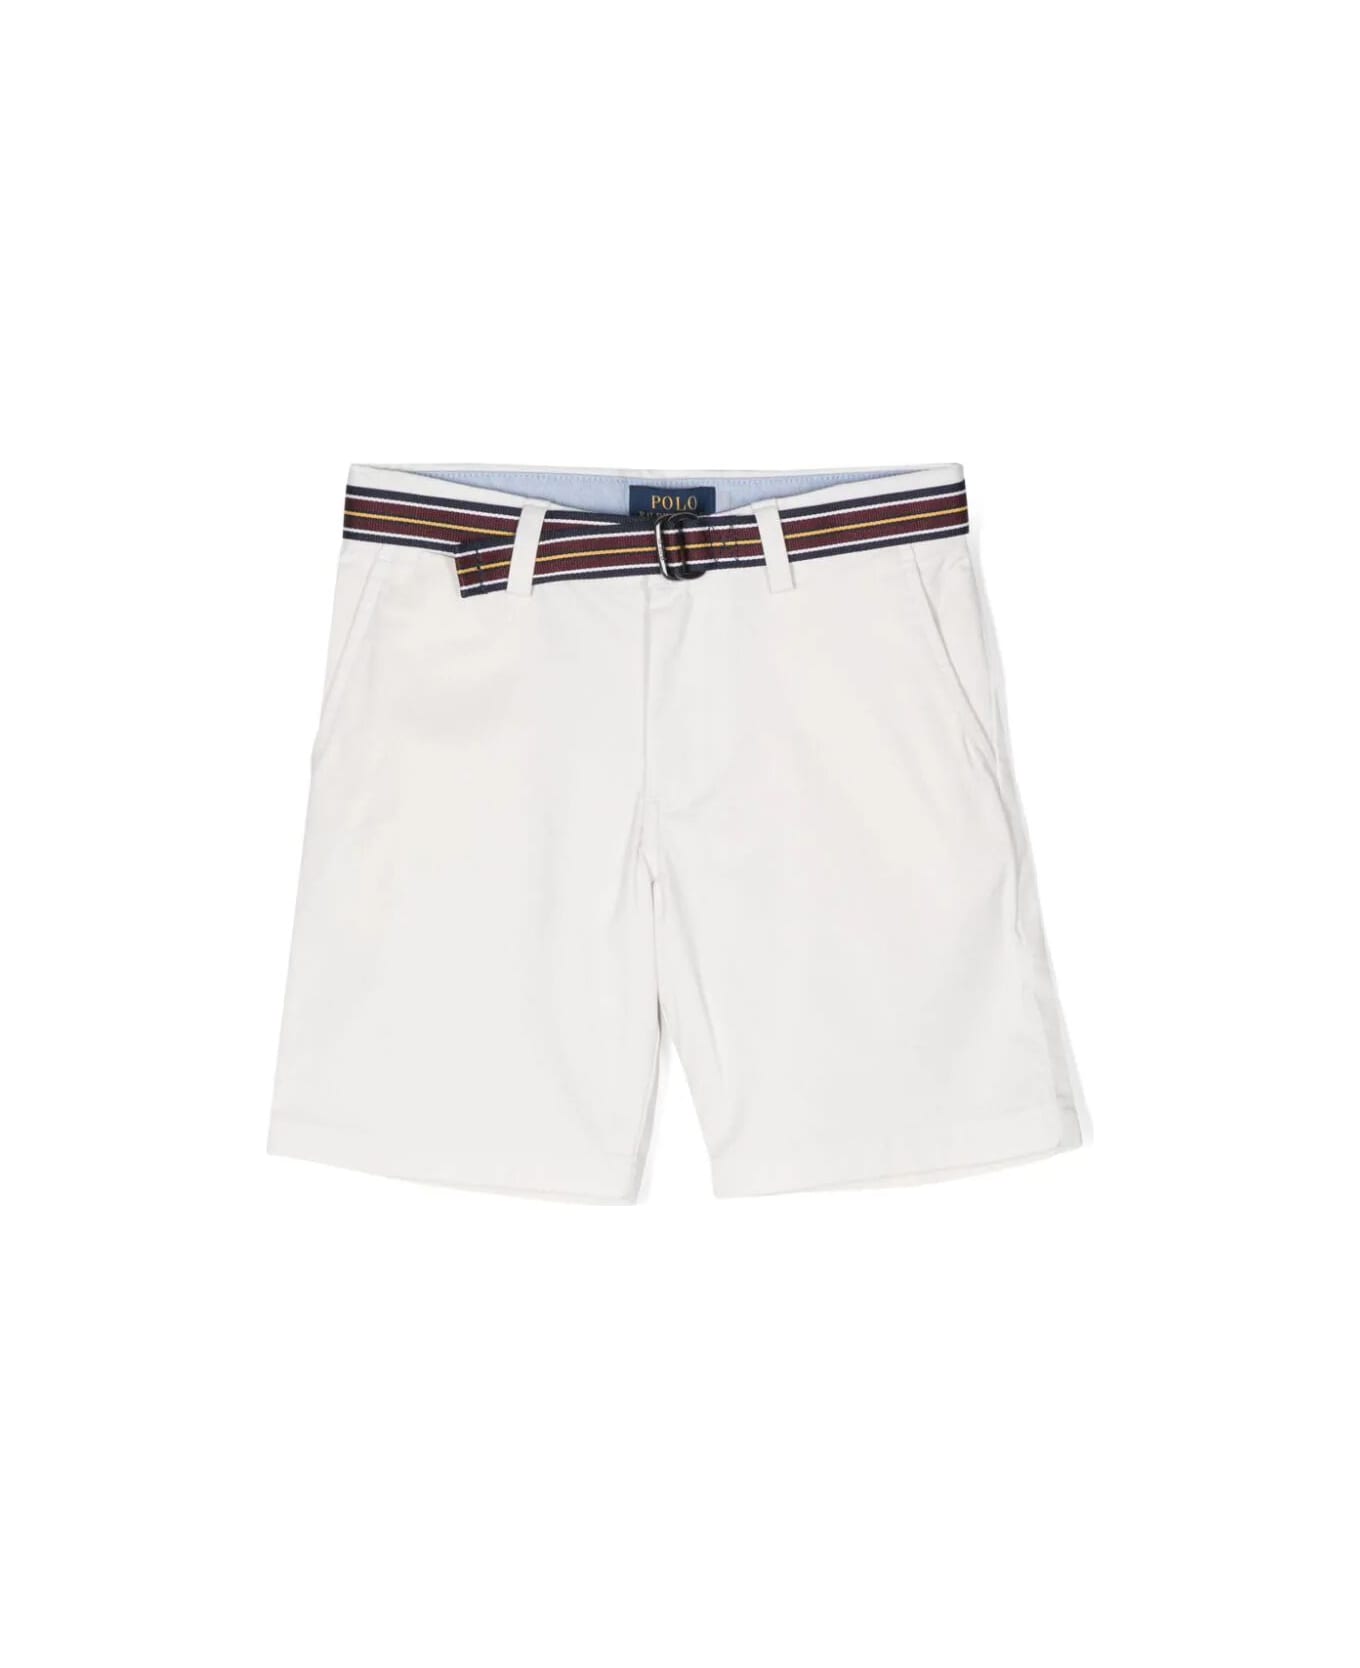 Polo Ralph Lauren Bedford Shrt Shorts Flat Front - Deckwash White